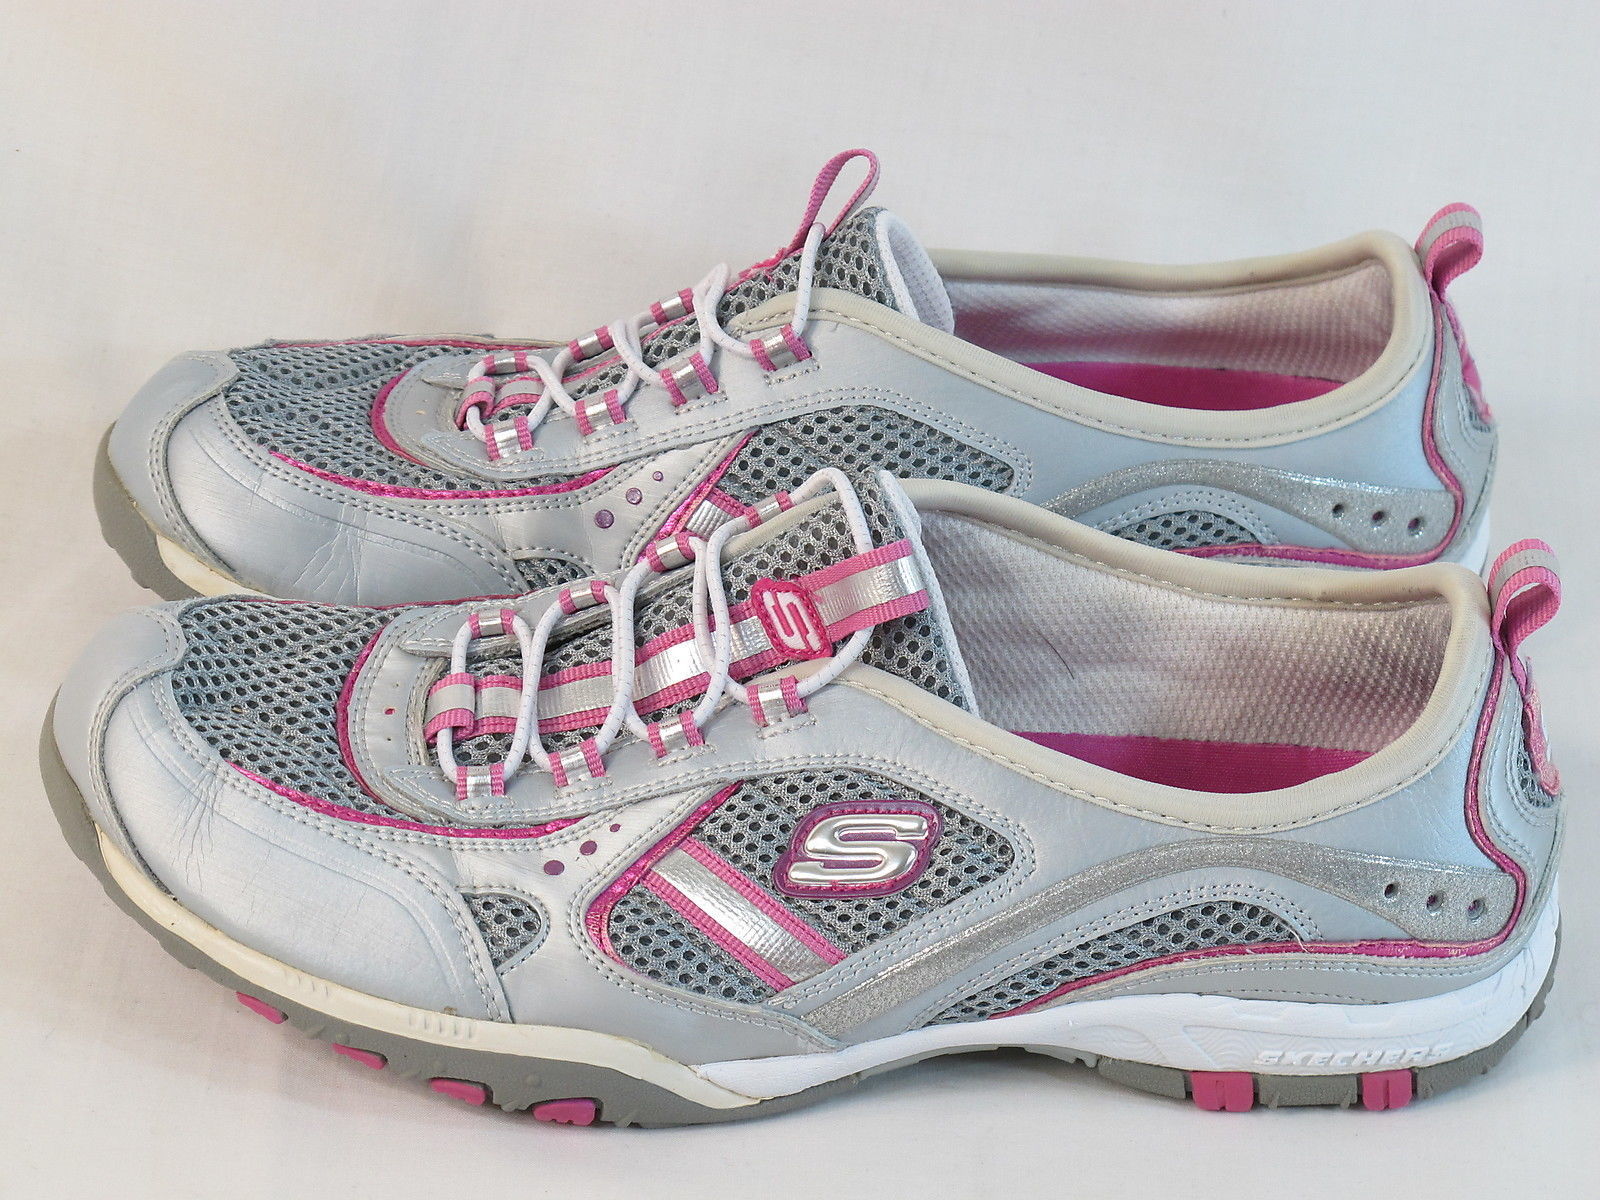 Skechers Athletic Shoes Women’s Size 8 M US Near Mint Condition ...